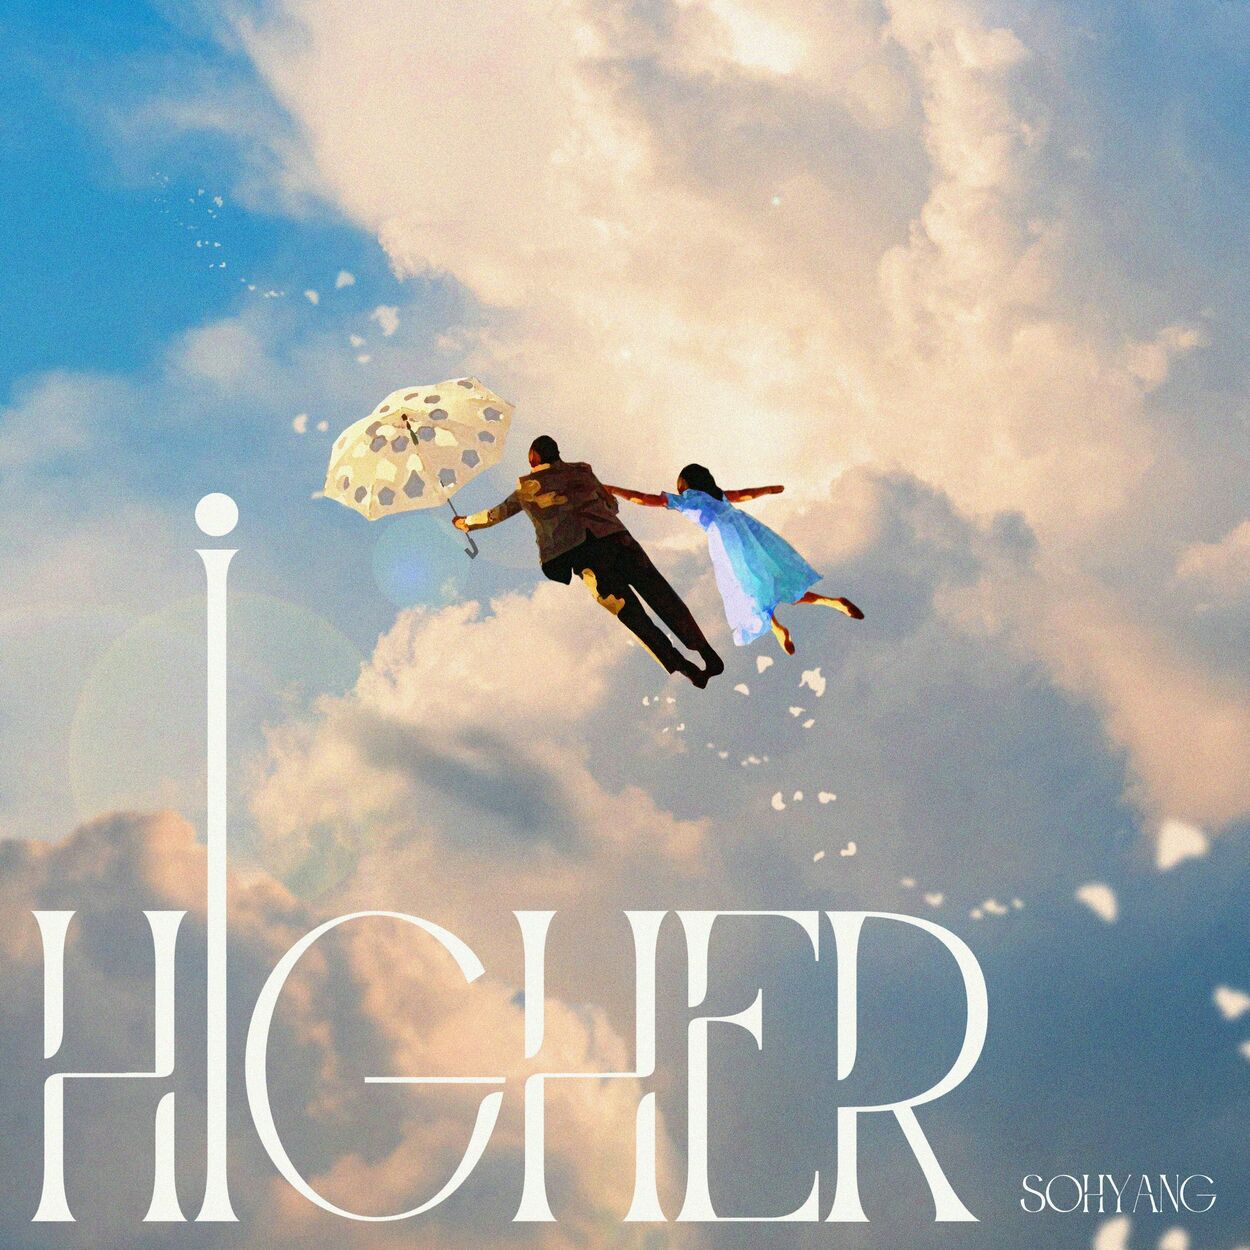 Sohyang – Higher (Acoustic) – Single